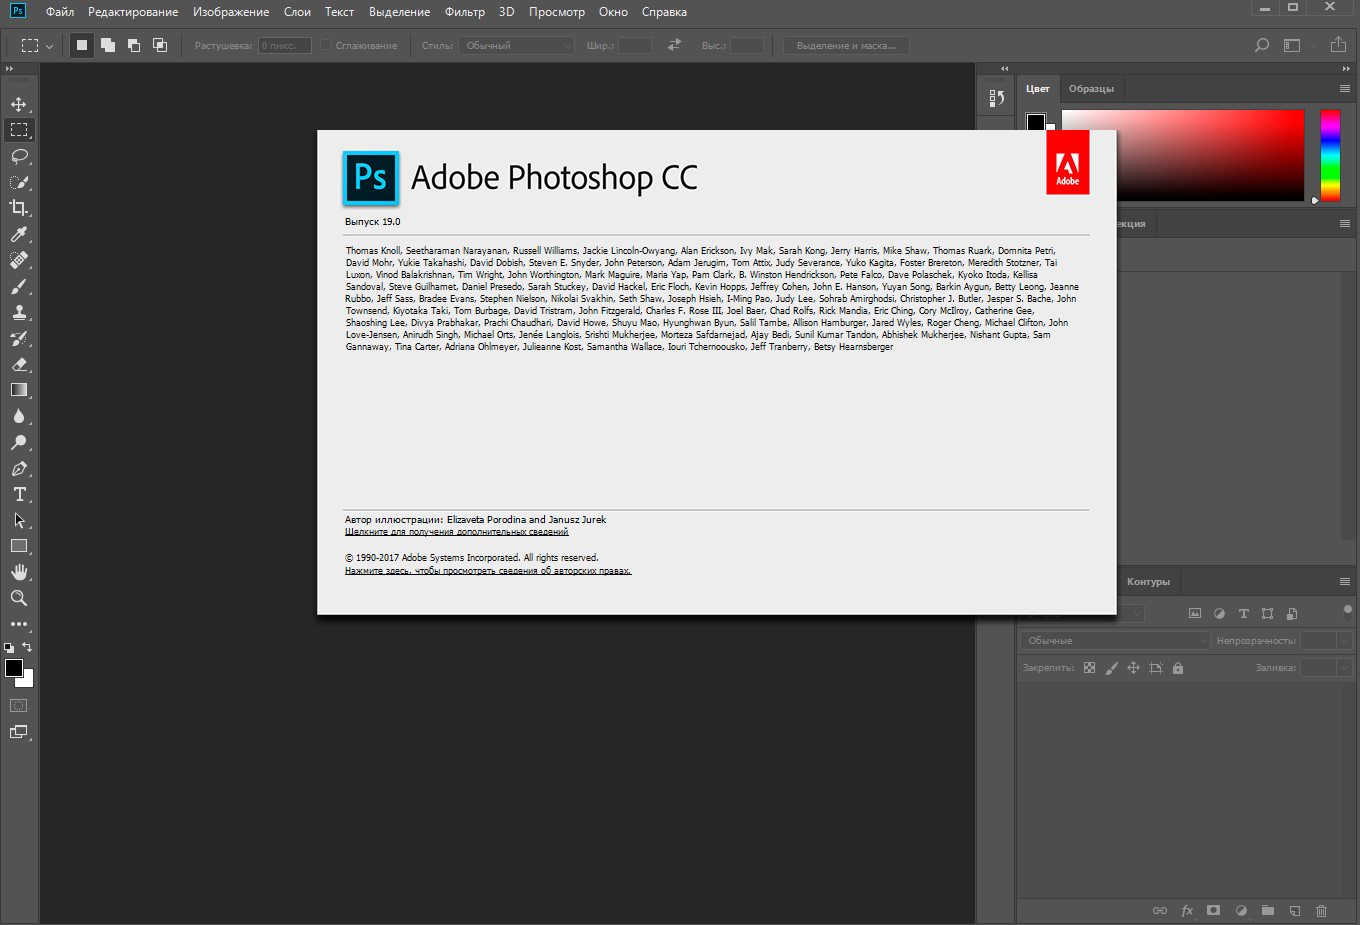 Adobe Photoshop CC 2019 20.0.6.27696 x86 x64 Win Mac Portable